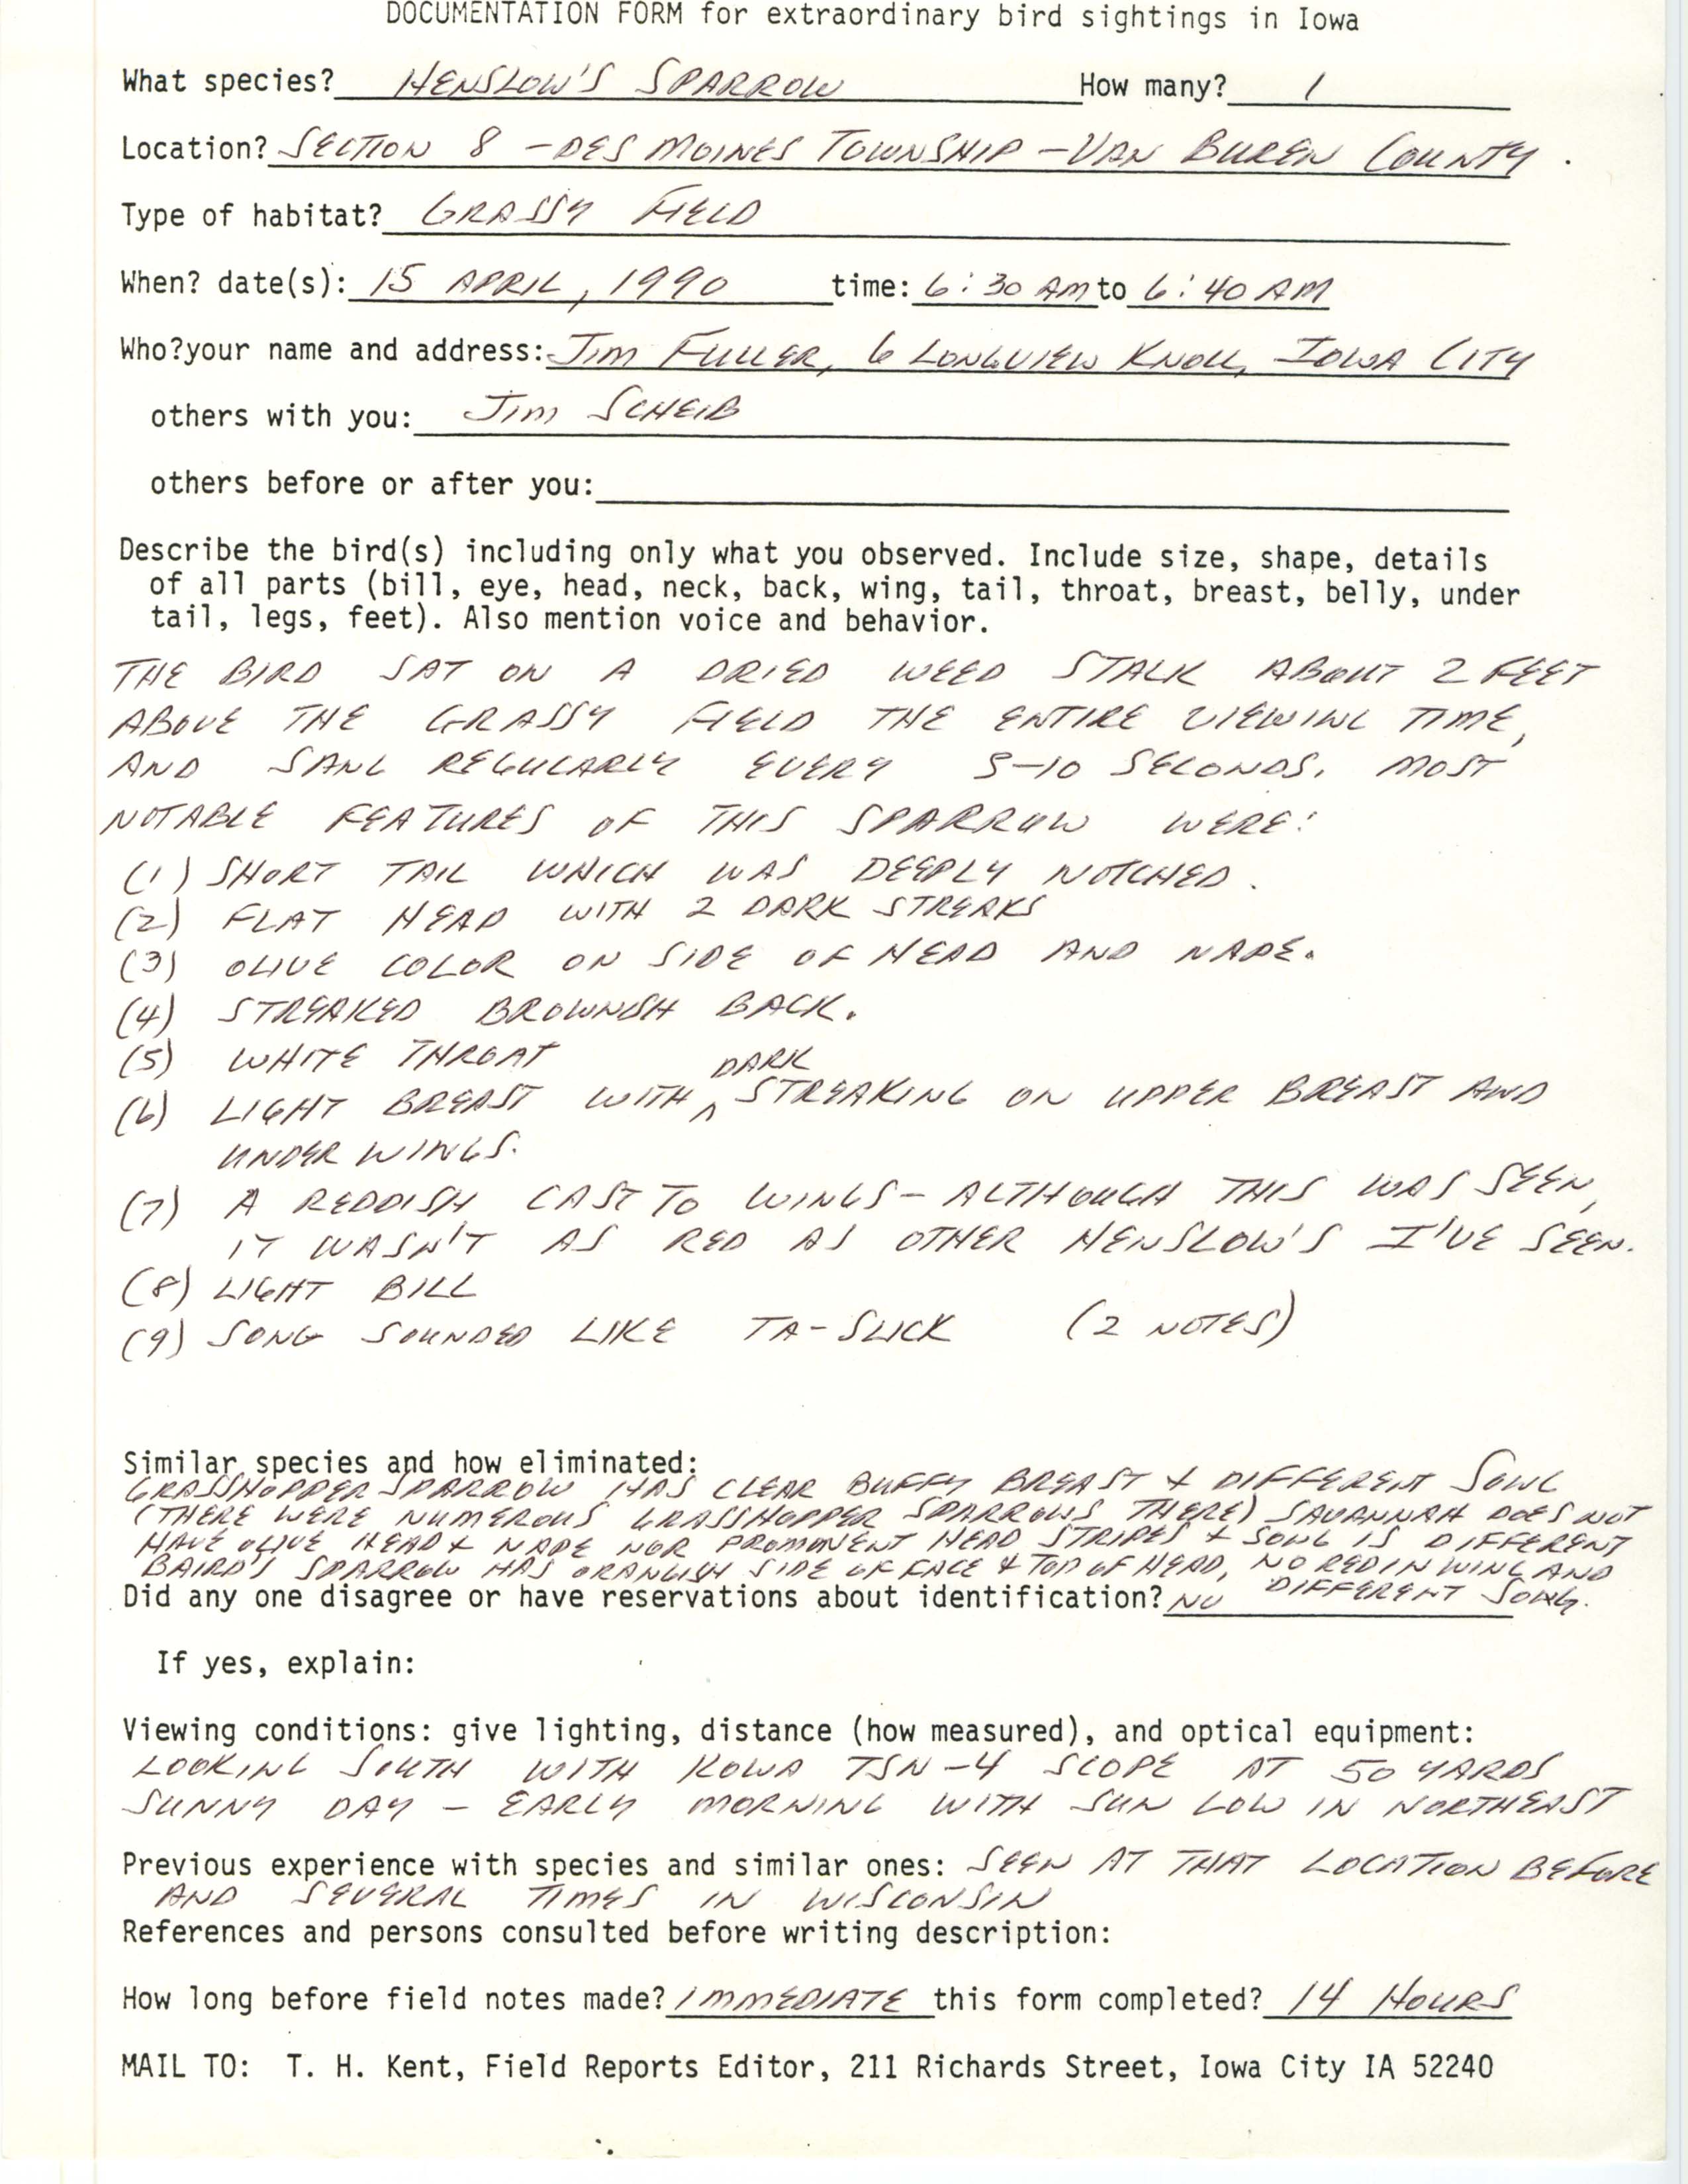 Rare bird documentation form for Henslow's Sparrow at Des Moines Township in Van Buren County, 1990